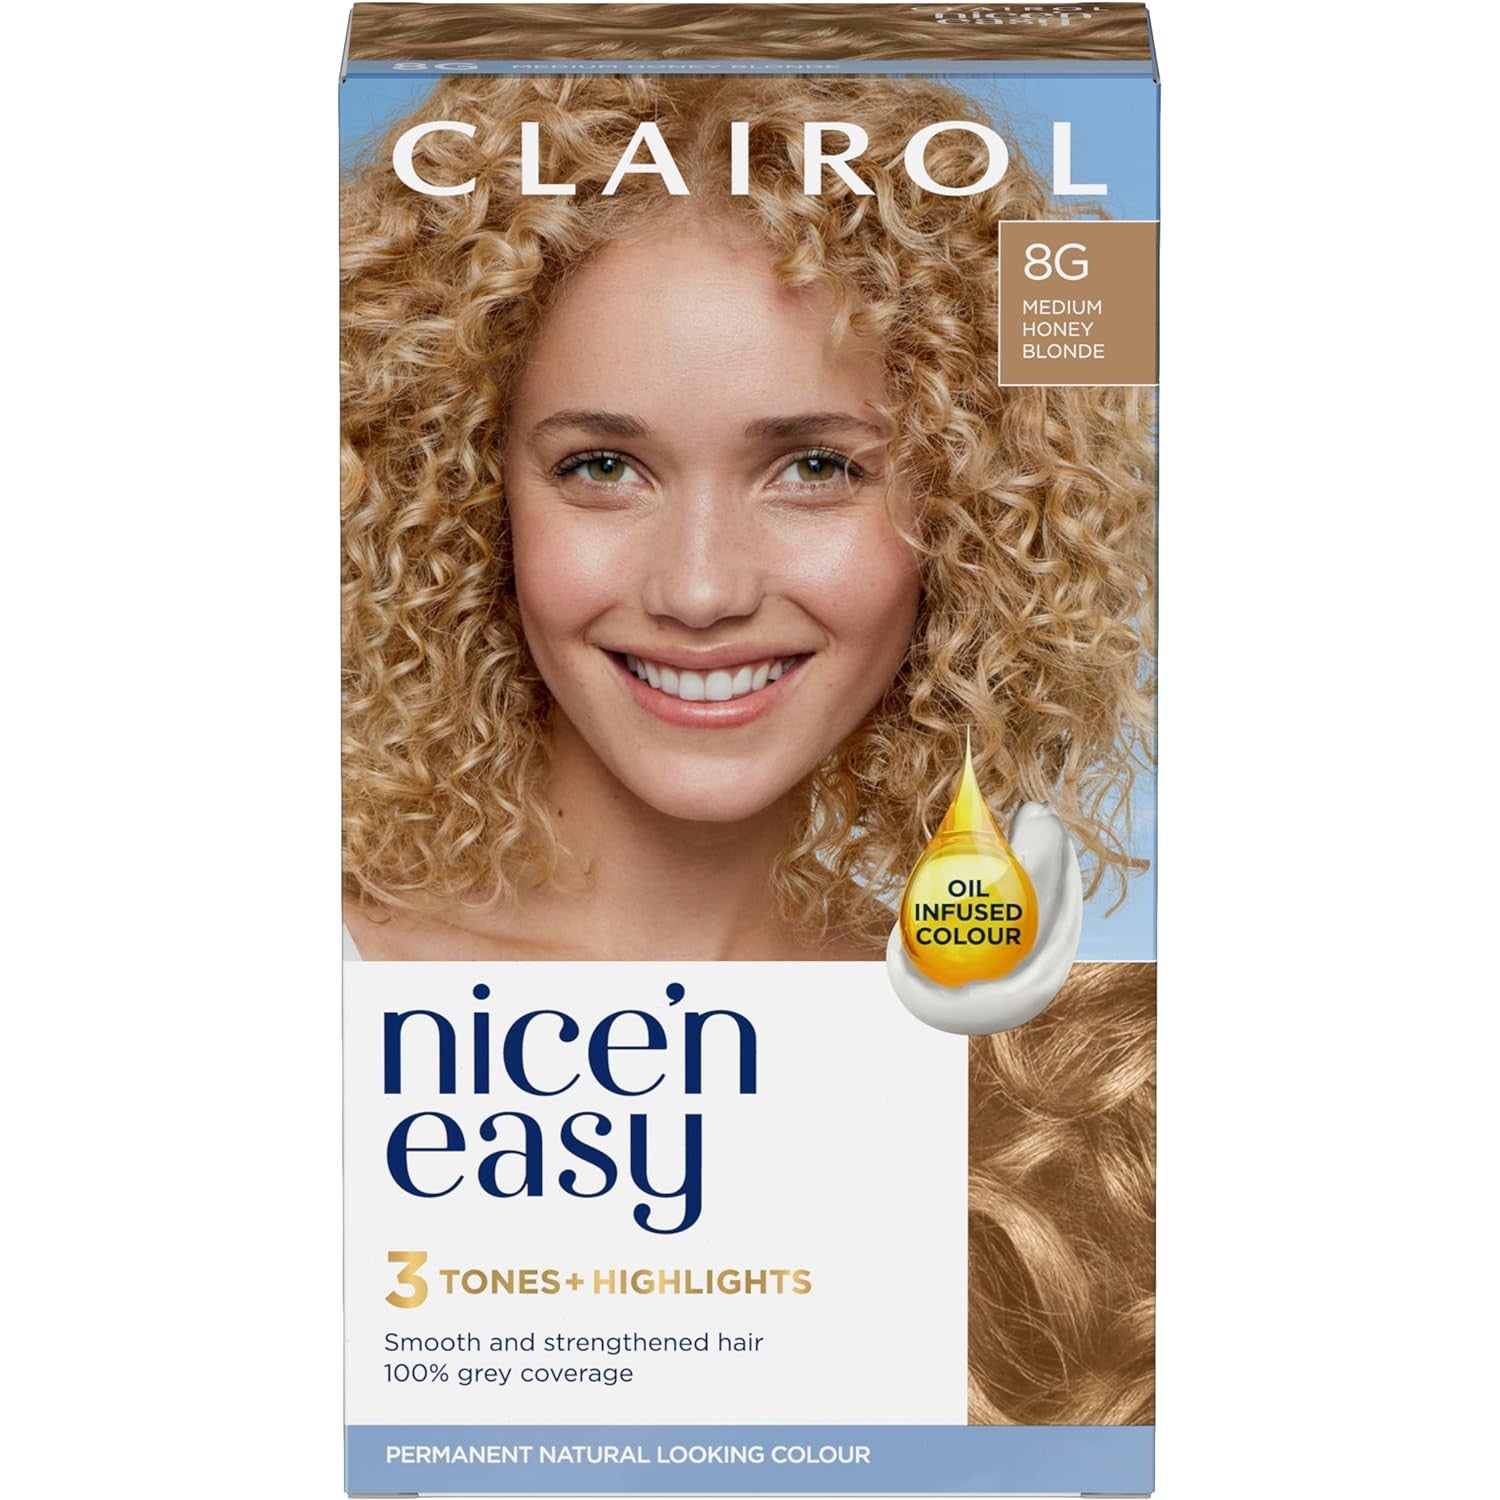 Clairol Nice'n Easy Crème, Permanent Hair Dye, 8G Medium Honey Blonde